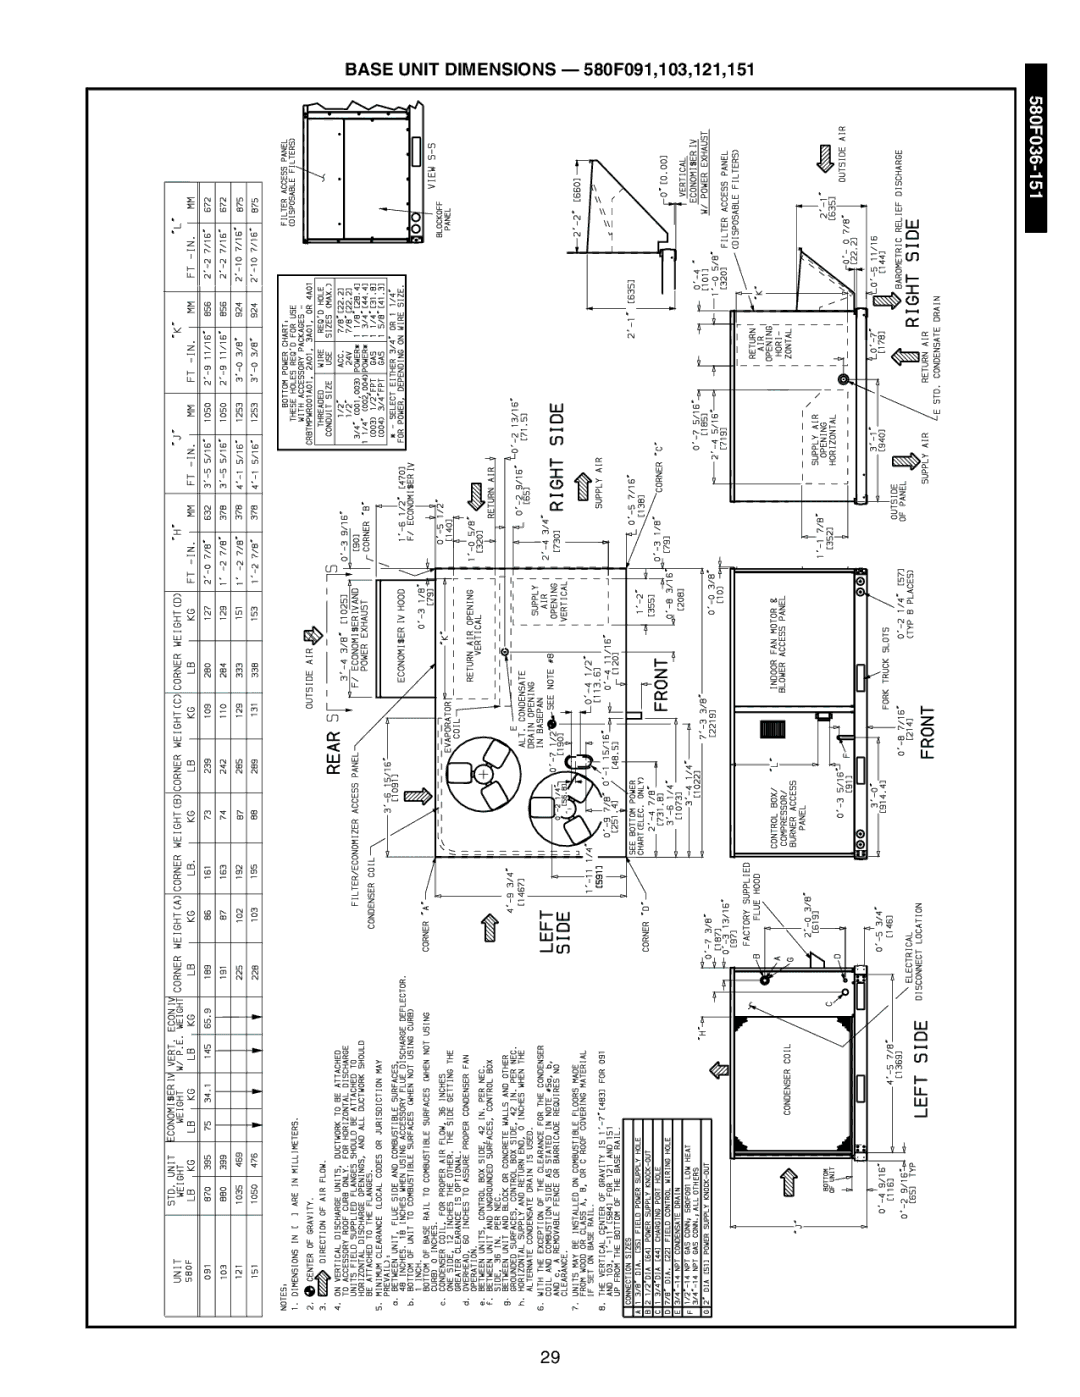 Bryant 581A/B manual Base Unit Dimensions 580F091,103,121,151 